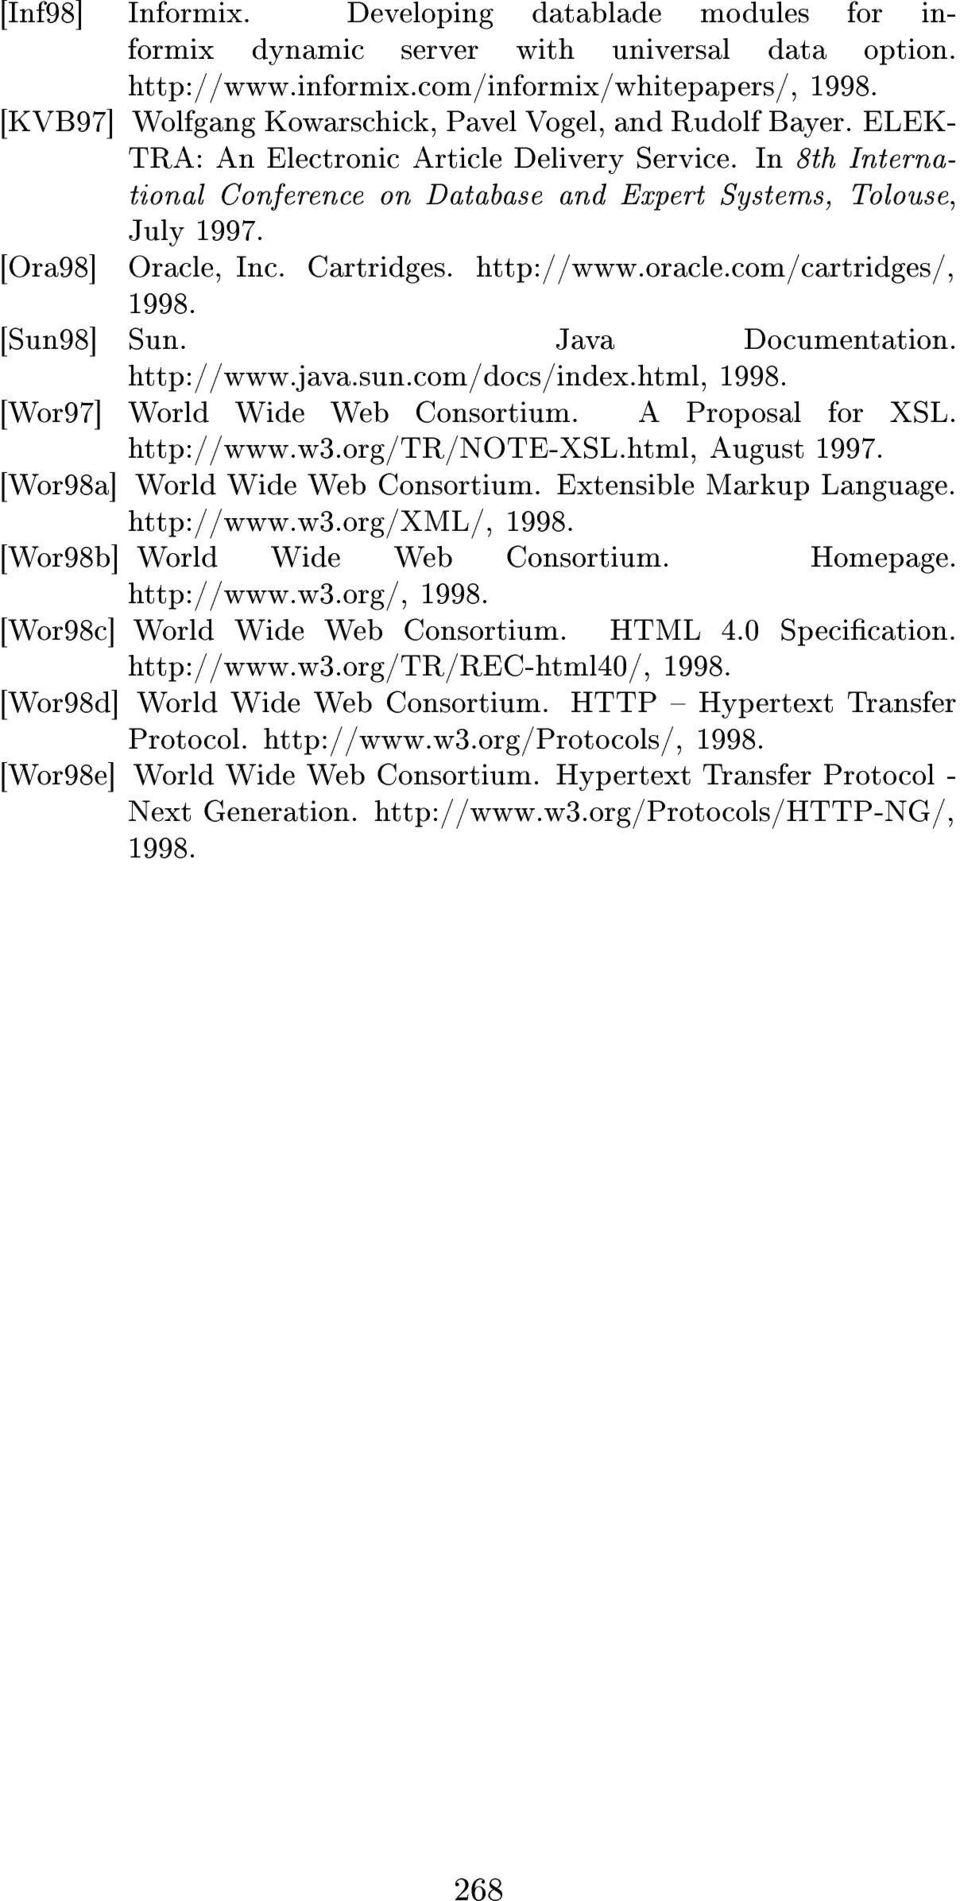 [Ora98] Oracle, Inc. Cartridges. http://www.oracle.com/cartridges/, 1998. [Sun98] Sun. Java Documentation. http://www.java.sun.com/docs/index.html, 1998. [Wor97] World Wide Web Consortium.